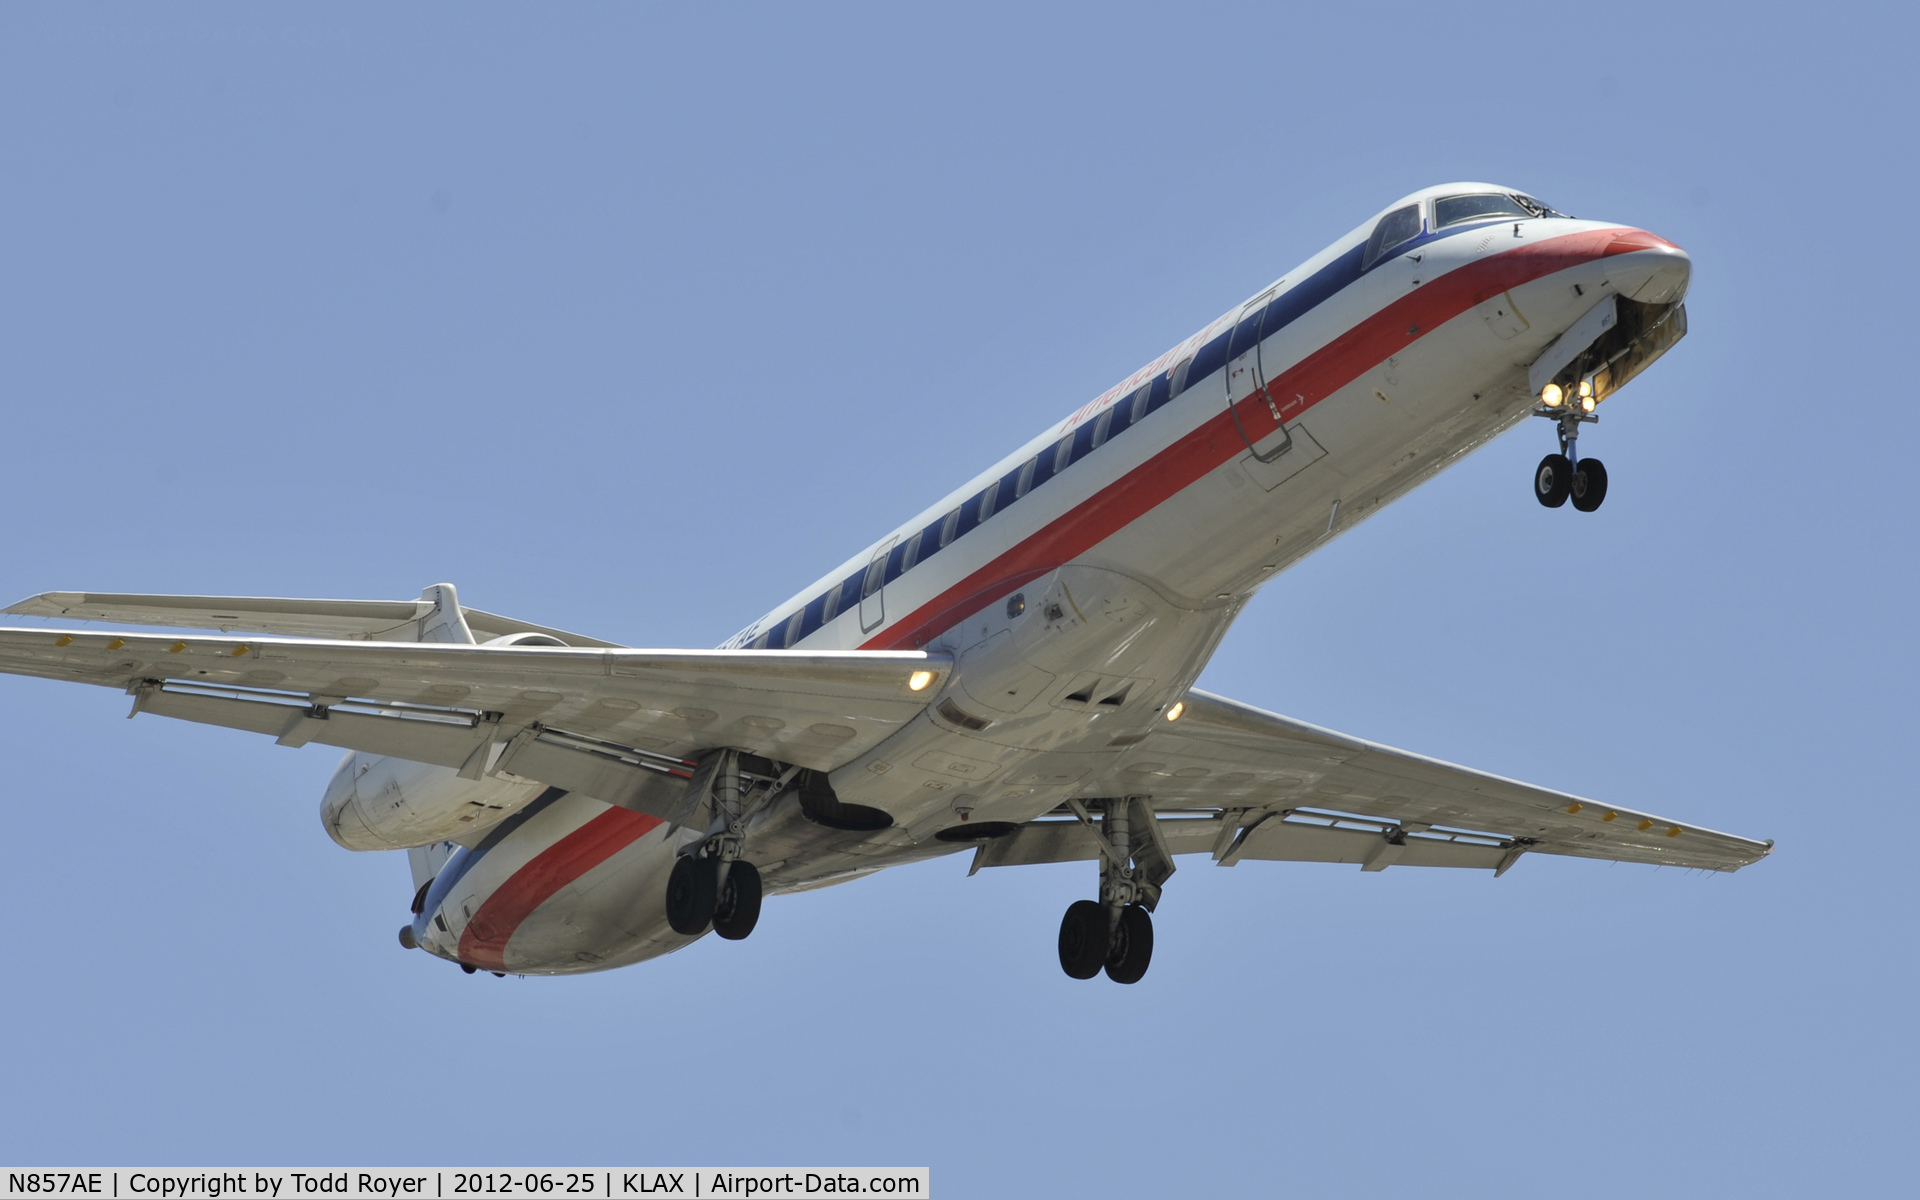 N857AE, 2003 Embraer ERJ-140LR (EMB-135KL) C/N 145752, Arriving at LAX on 24R